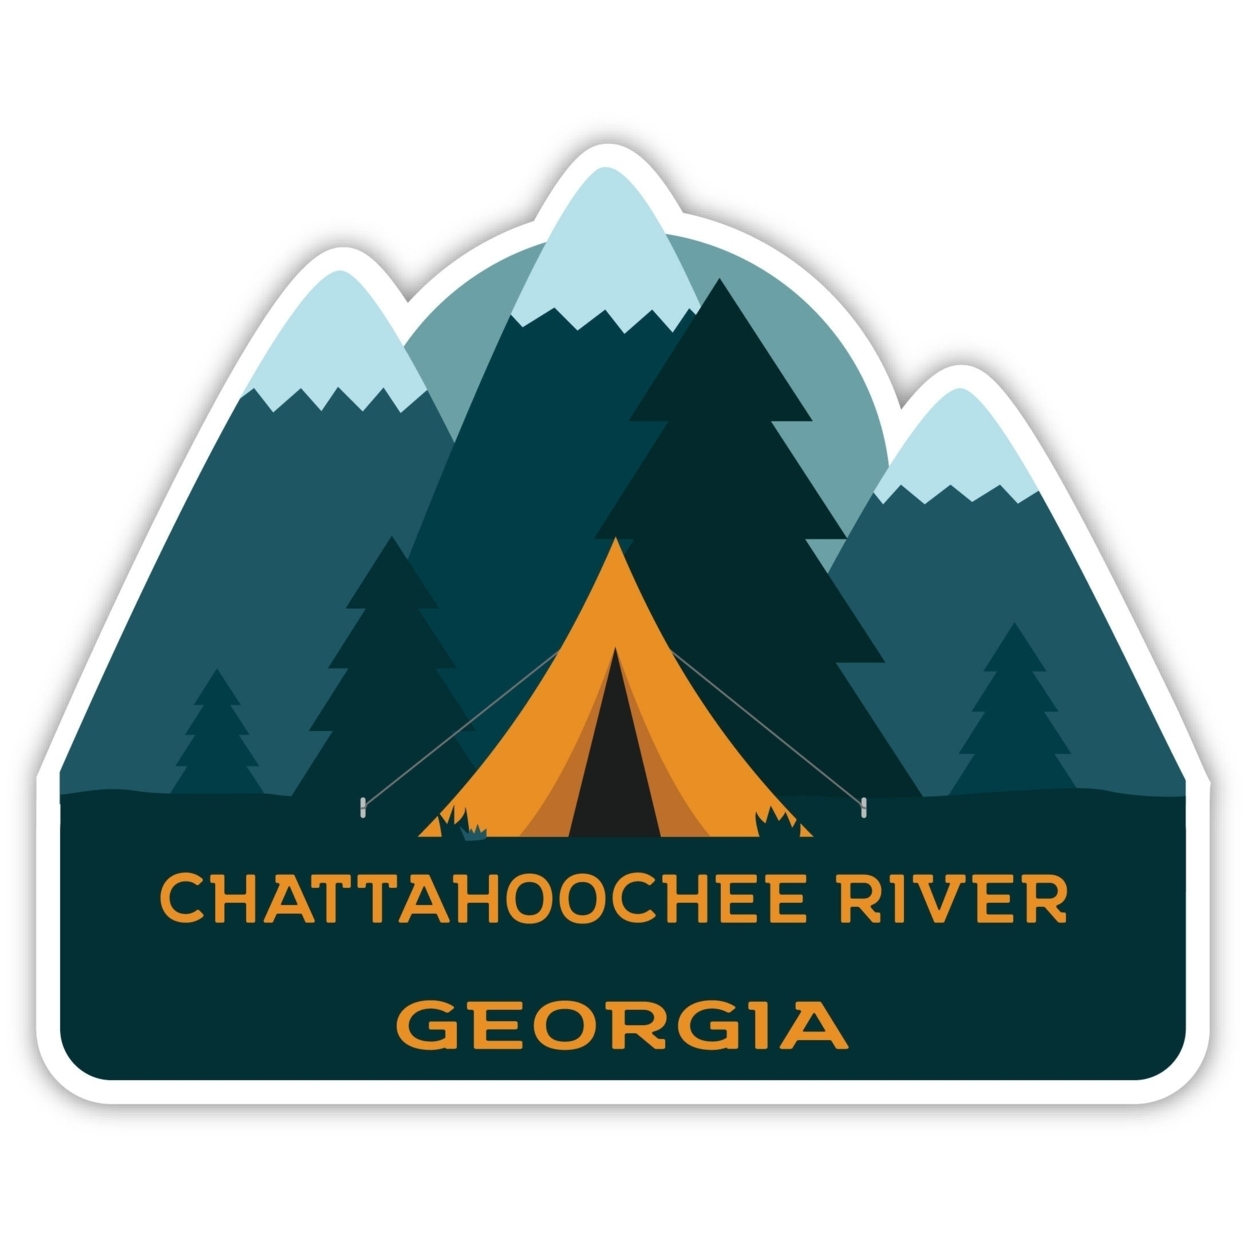 Chattahoochee River Georgia Souvenir Decorative Stickers (Choose Theme And Size) - Single Unit, 4-Inch, Tent